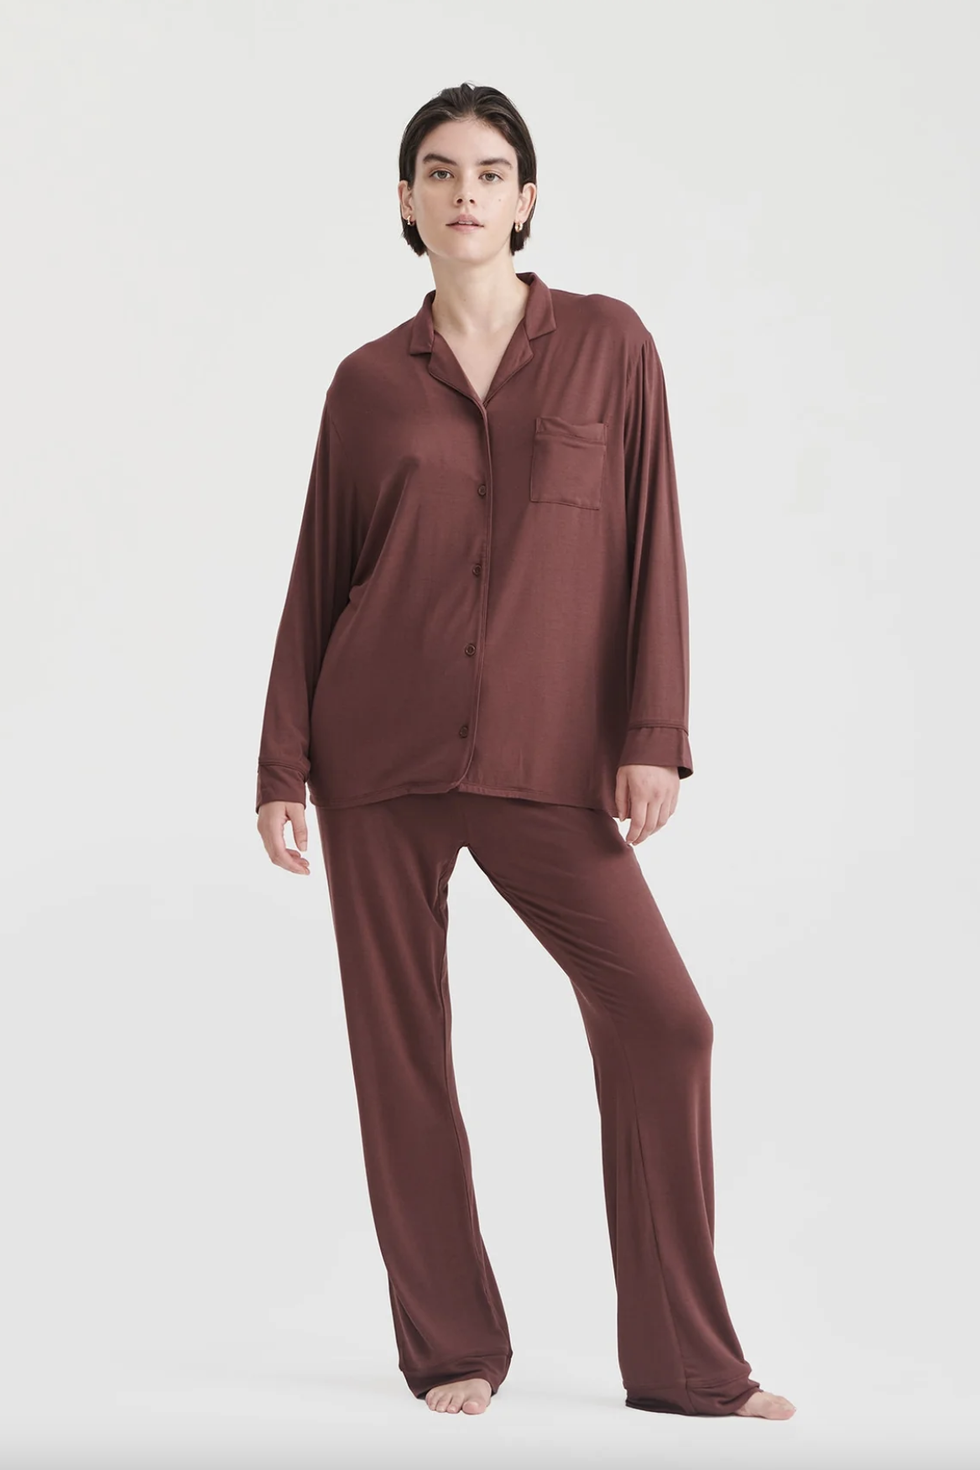 Matilda Black Plus Pajama shirt and pant set, XL-3X